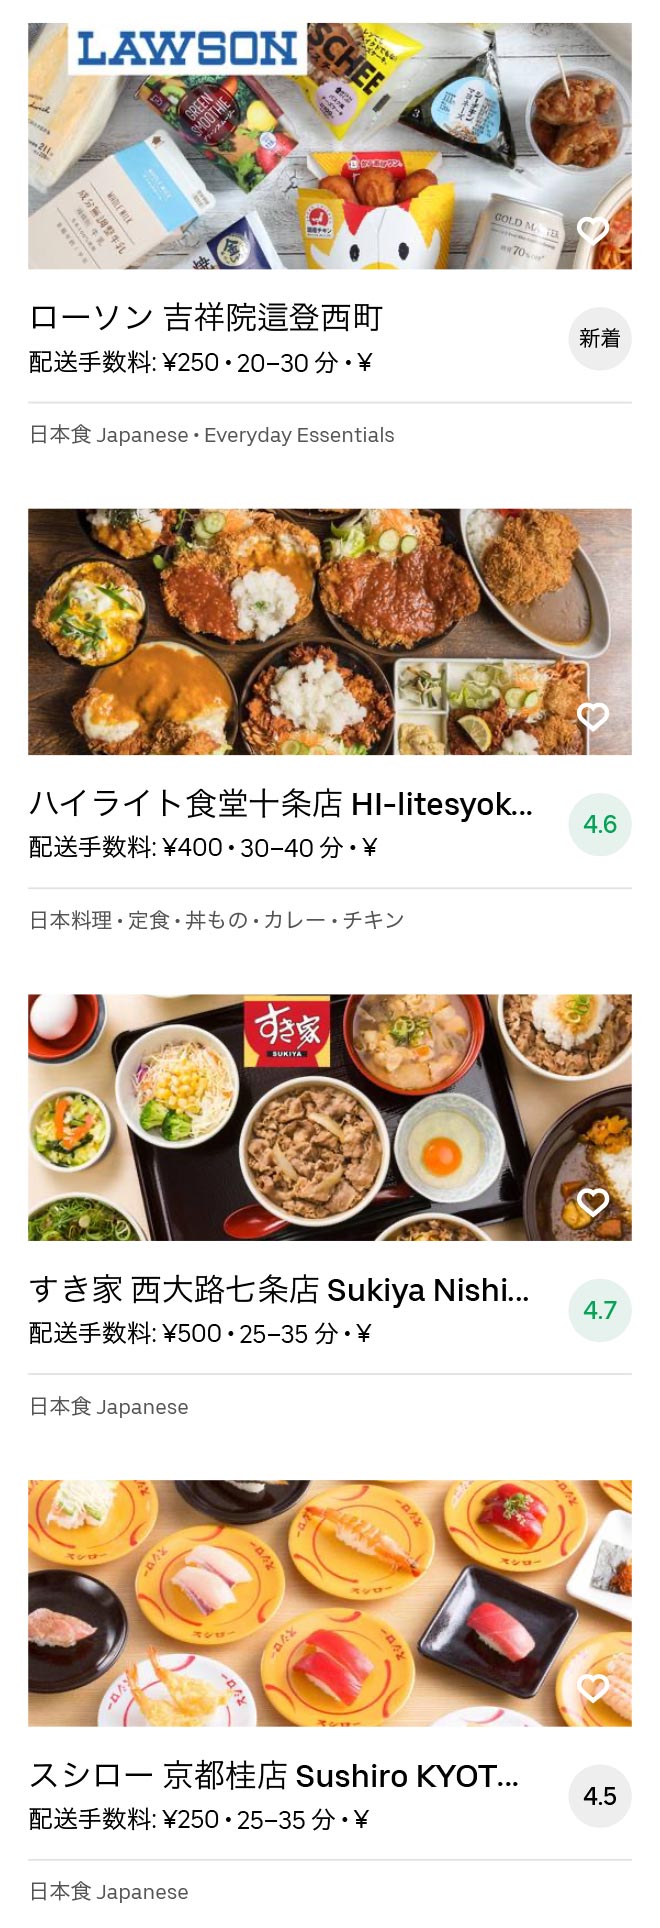 Mukoumachi menu 2008 03